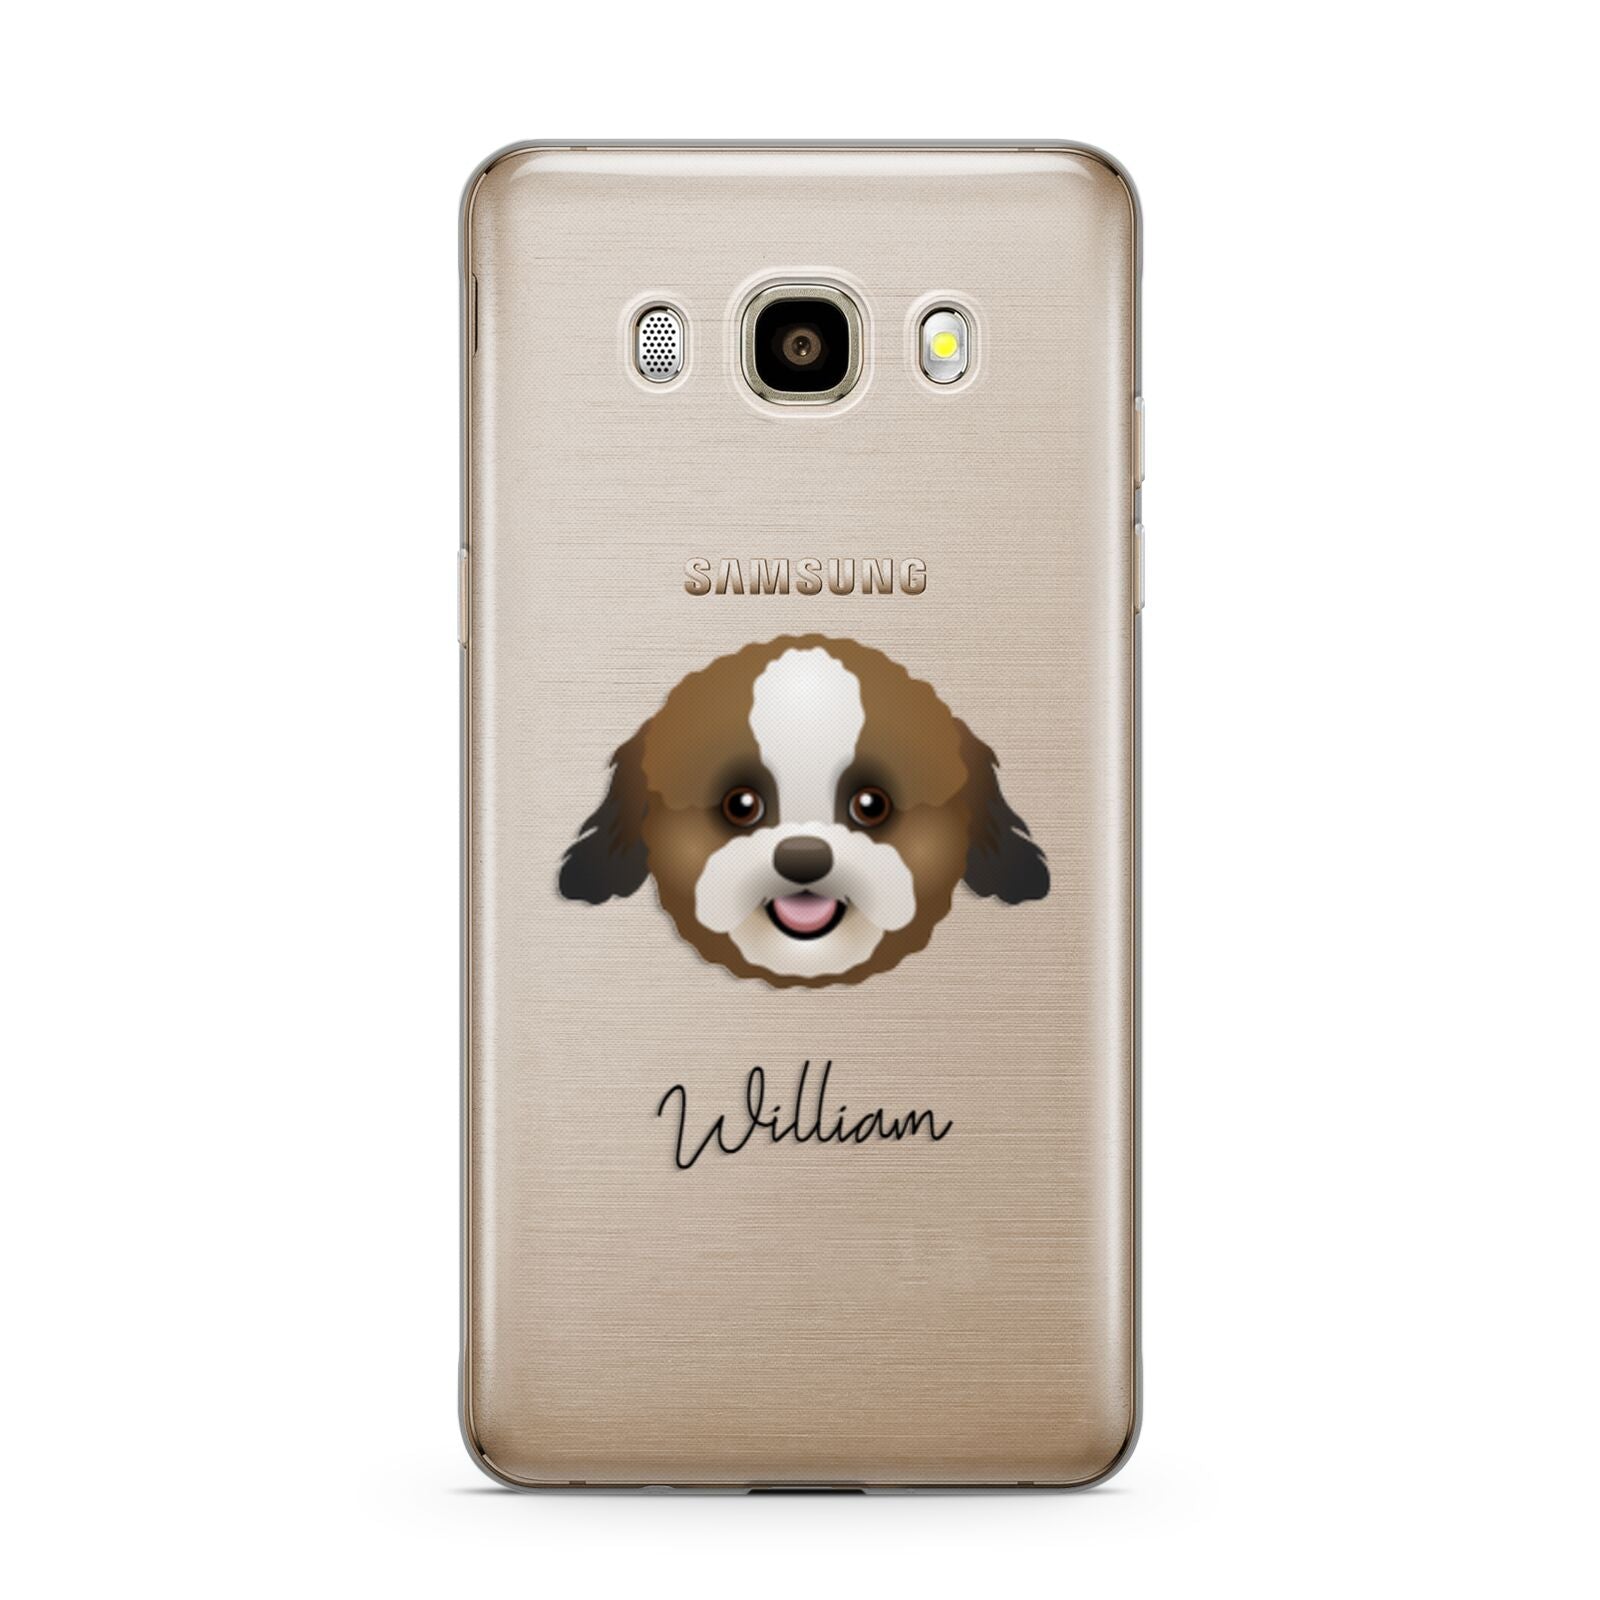 Zuchon Personalised Samsung Galaxy J7 2016 Case on gold phone